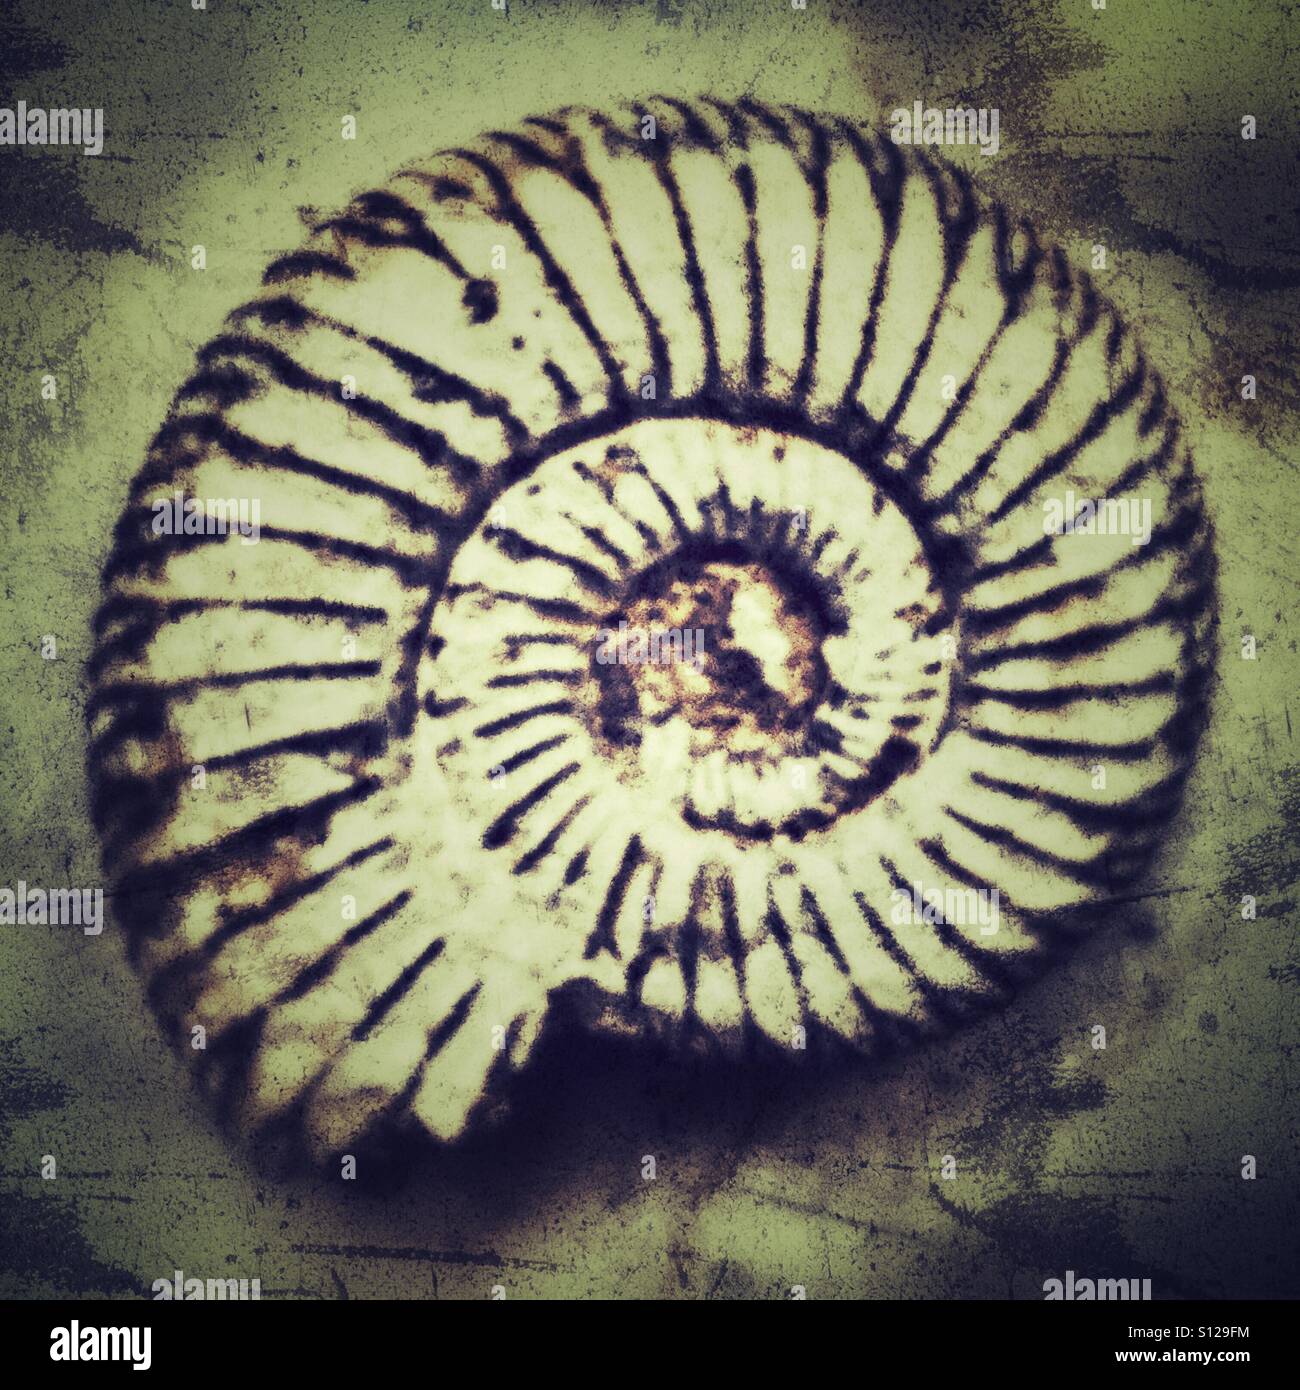 Ammonite fossil Stock Photo